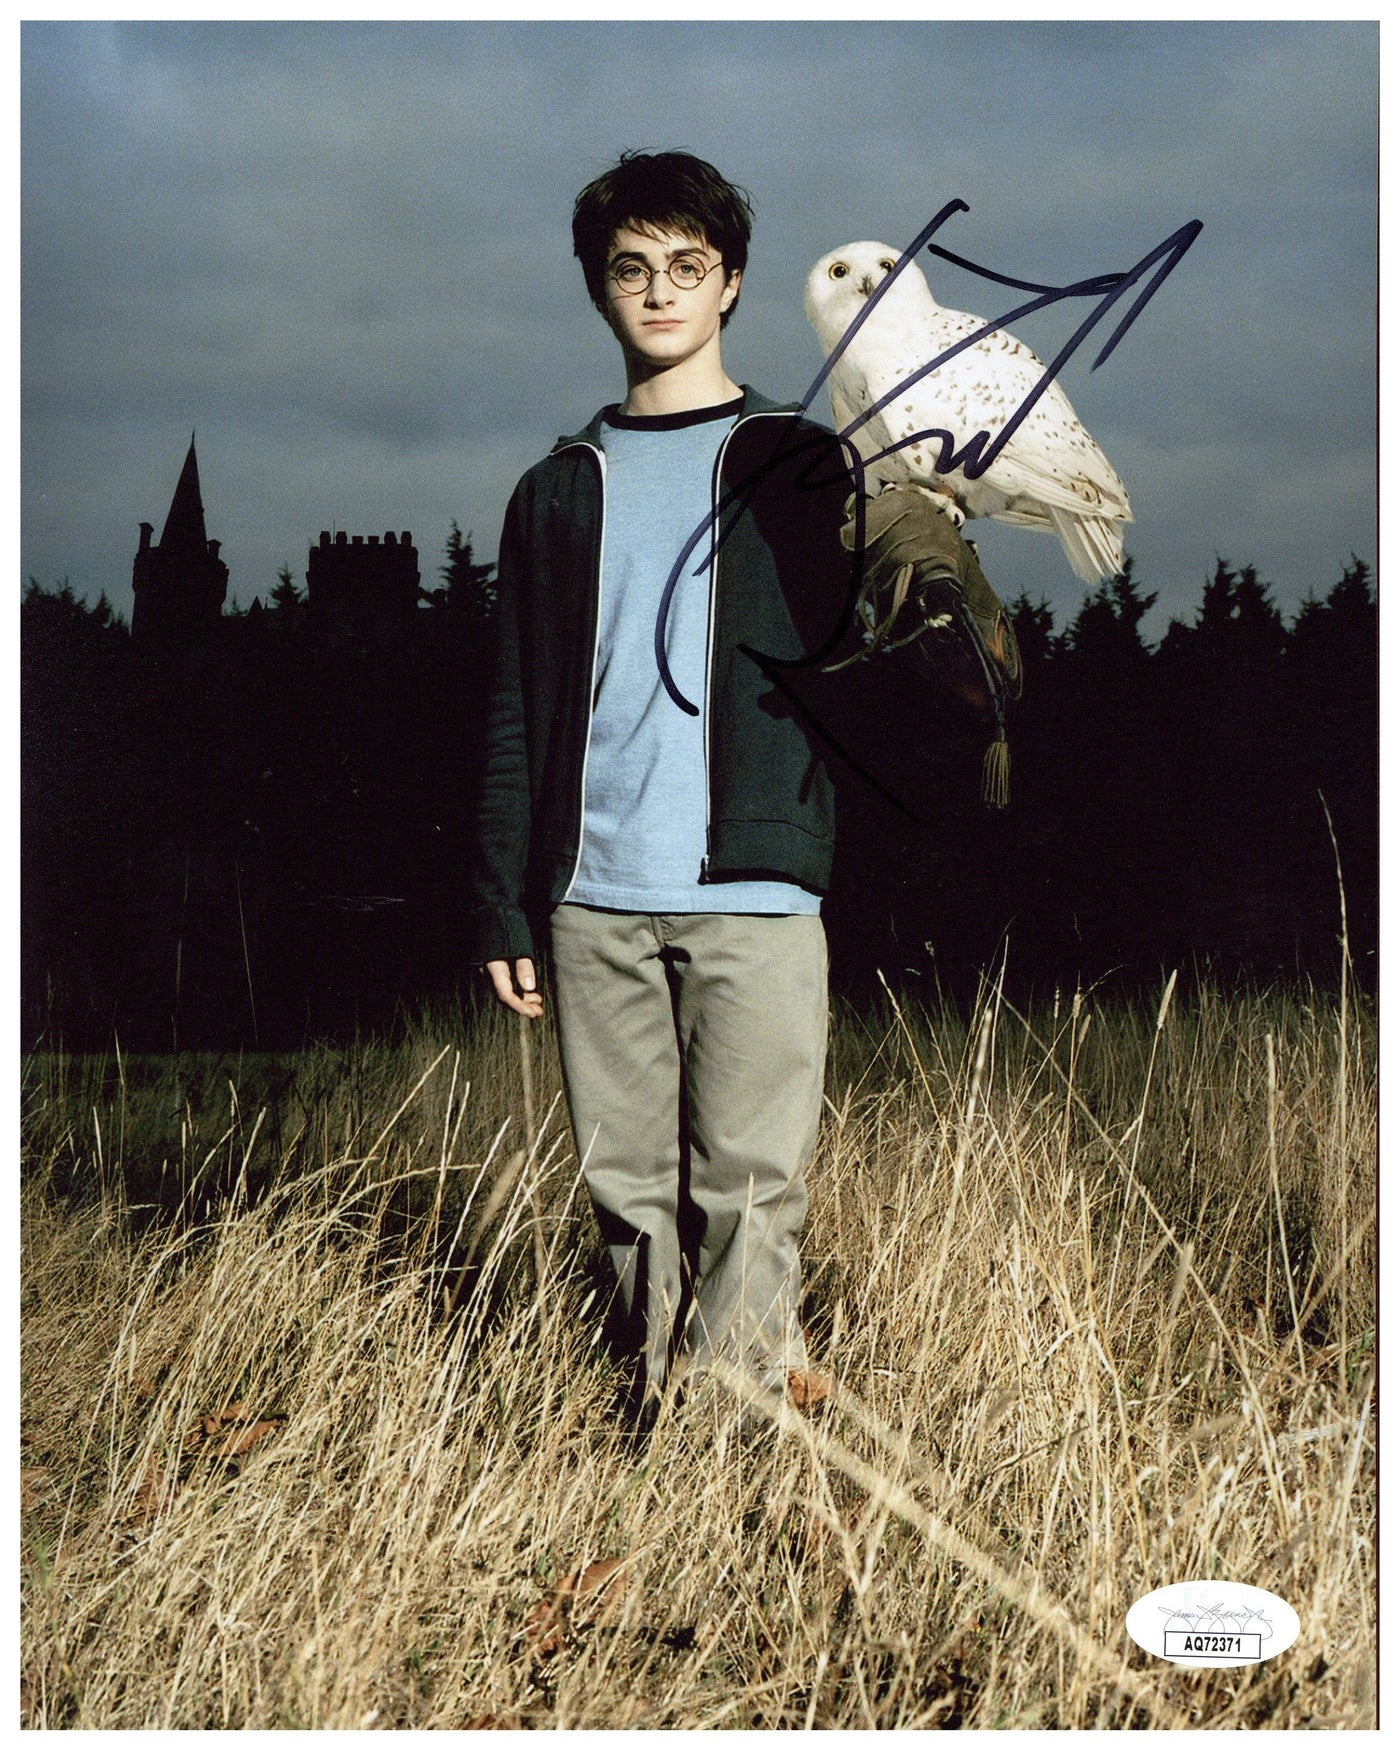 Daniel Radcliffe Signed 8x10 Photo Harry Potter Autographed JSA COA #3